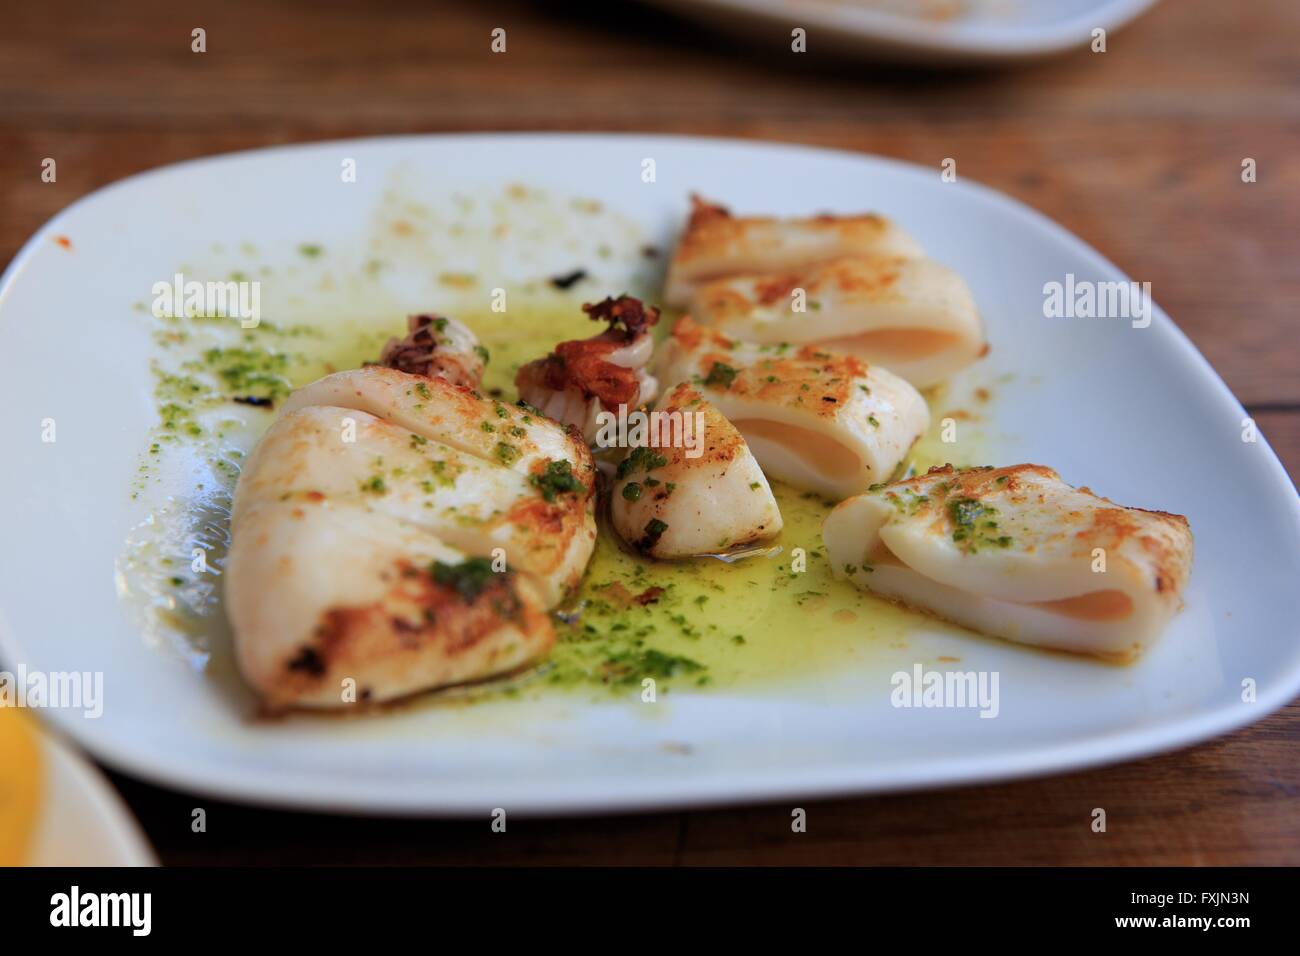 Fideuà Is Barcelona's Best Seafood Dish - Eater